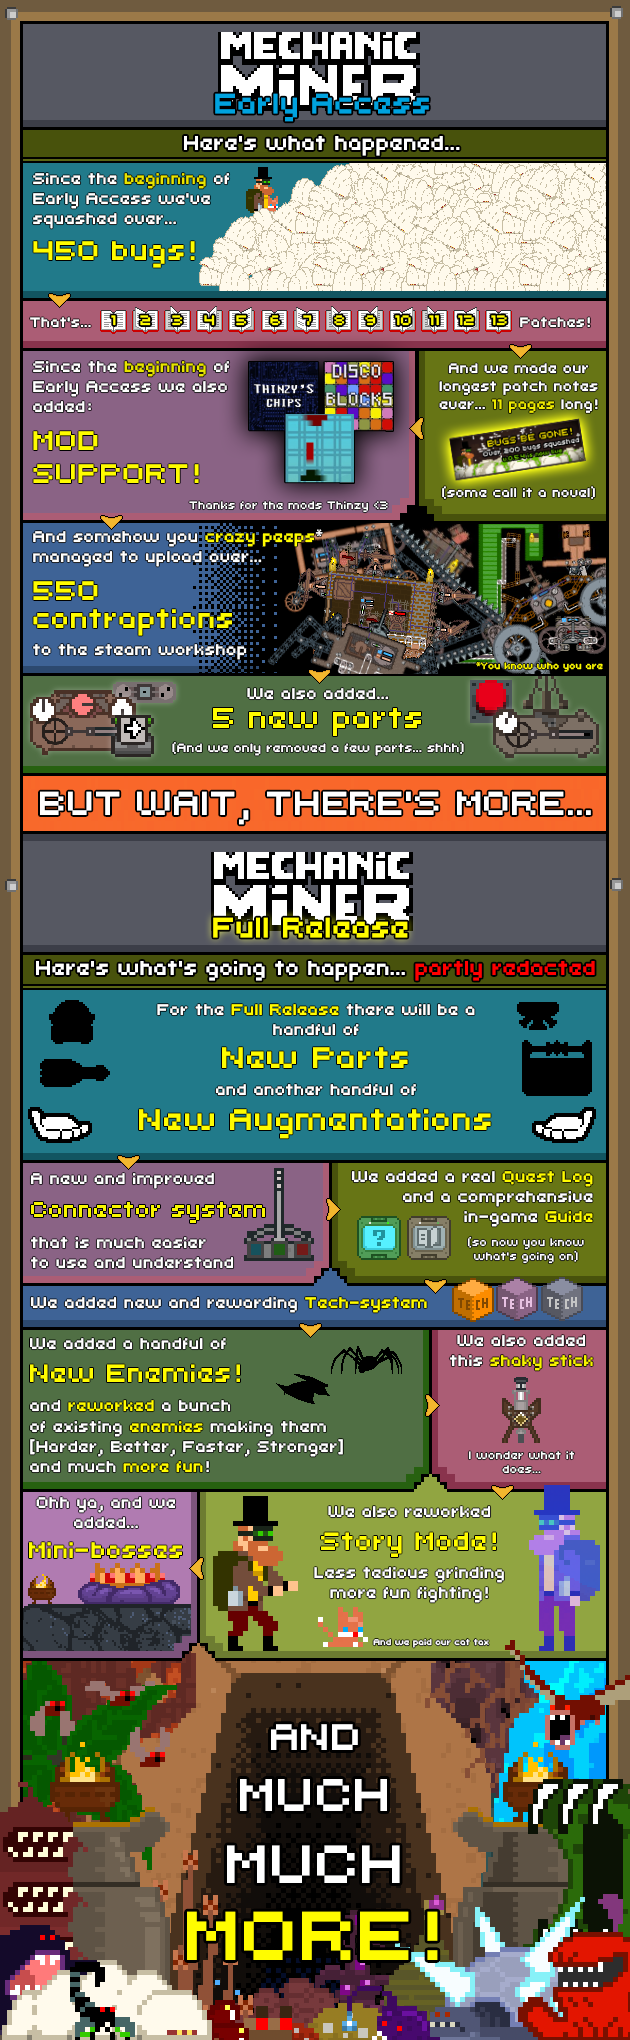 Steam Community Mechanic Miner